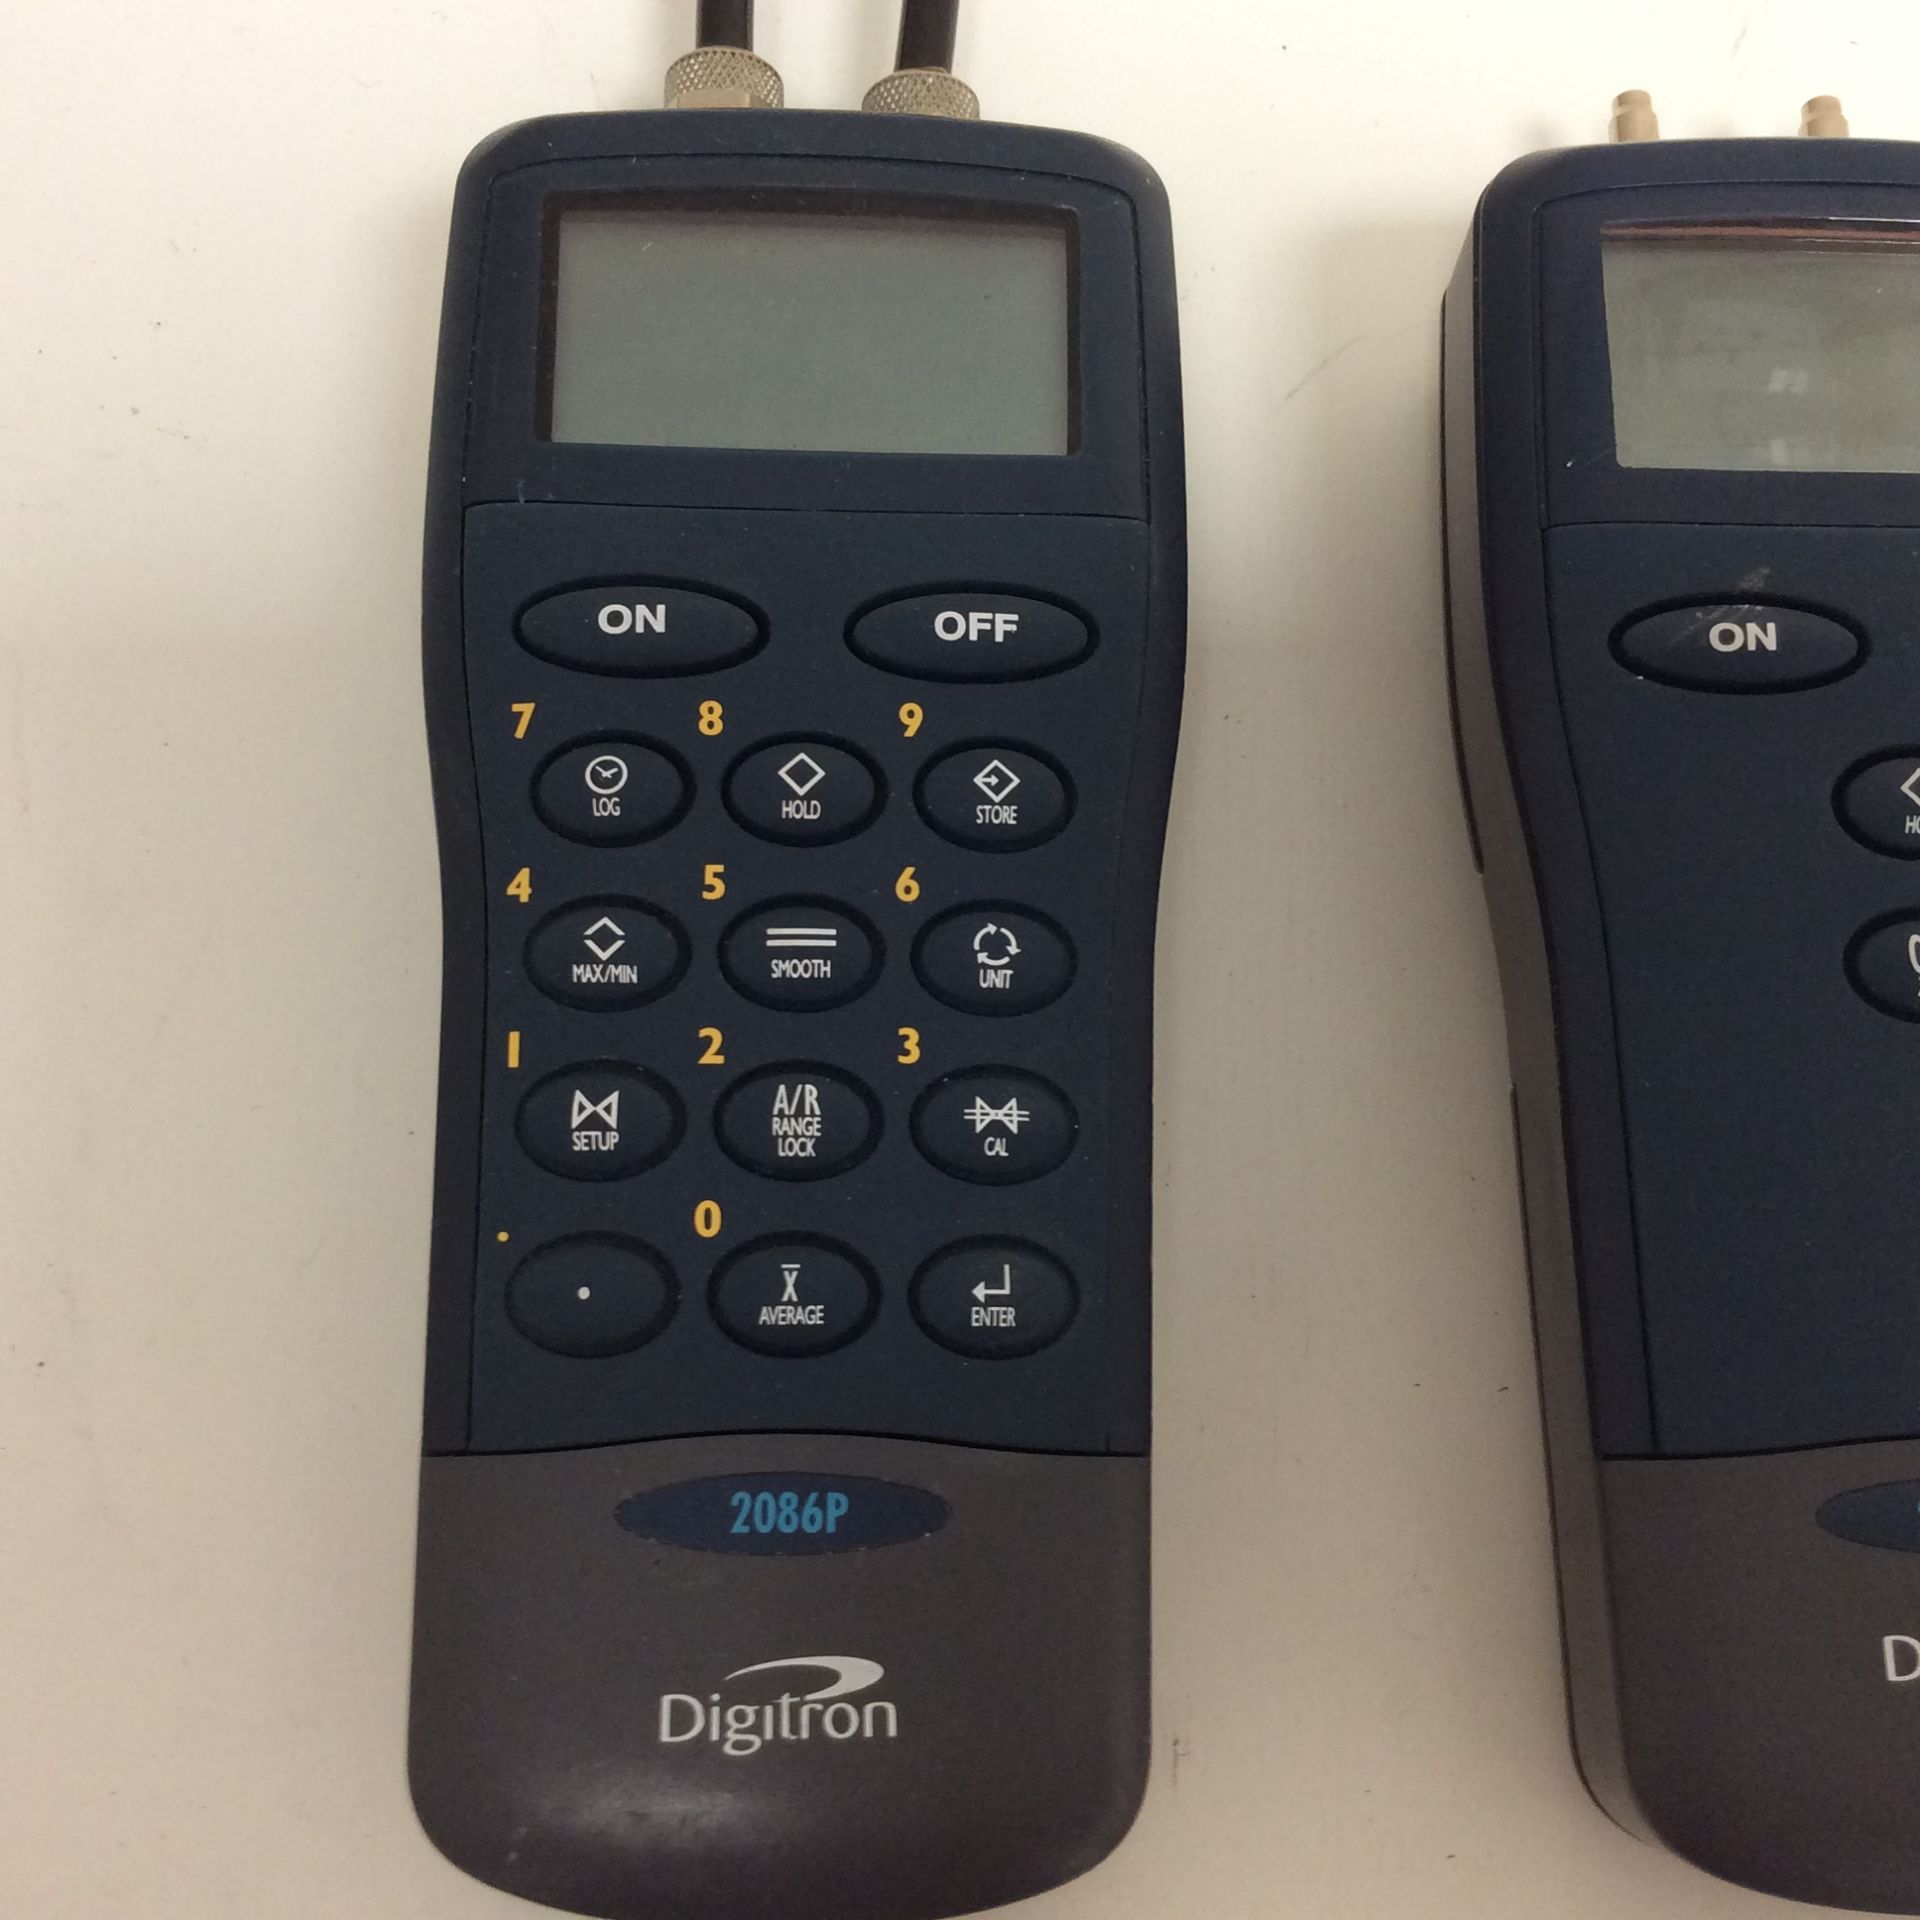 2x digitron pressure meters models 2086p and 2003p - Image 2 of 4